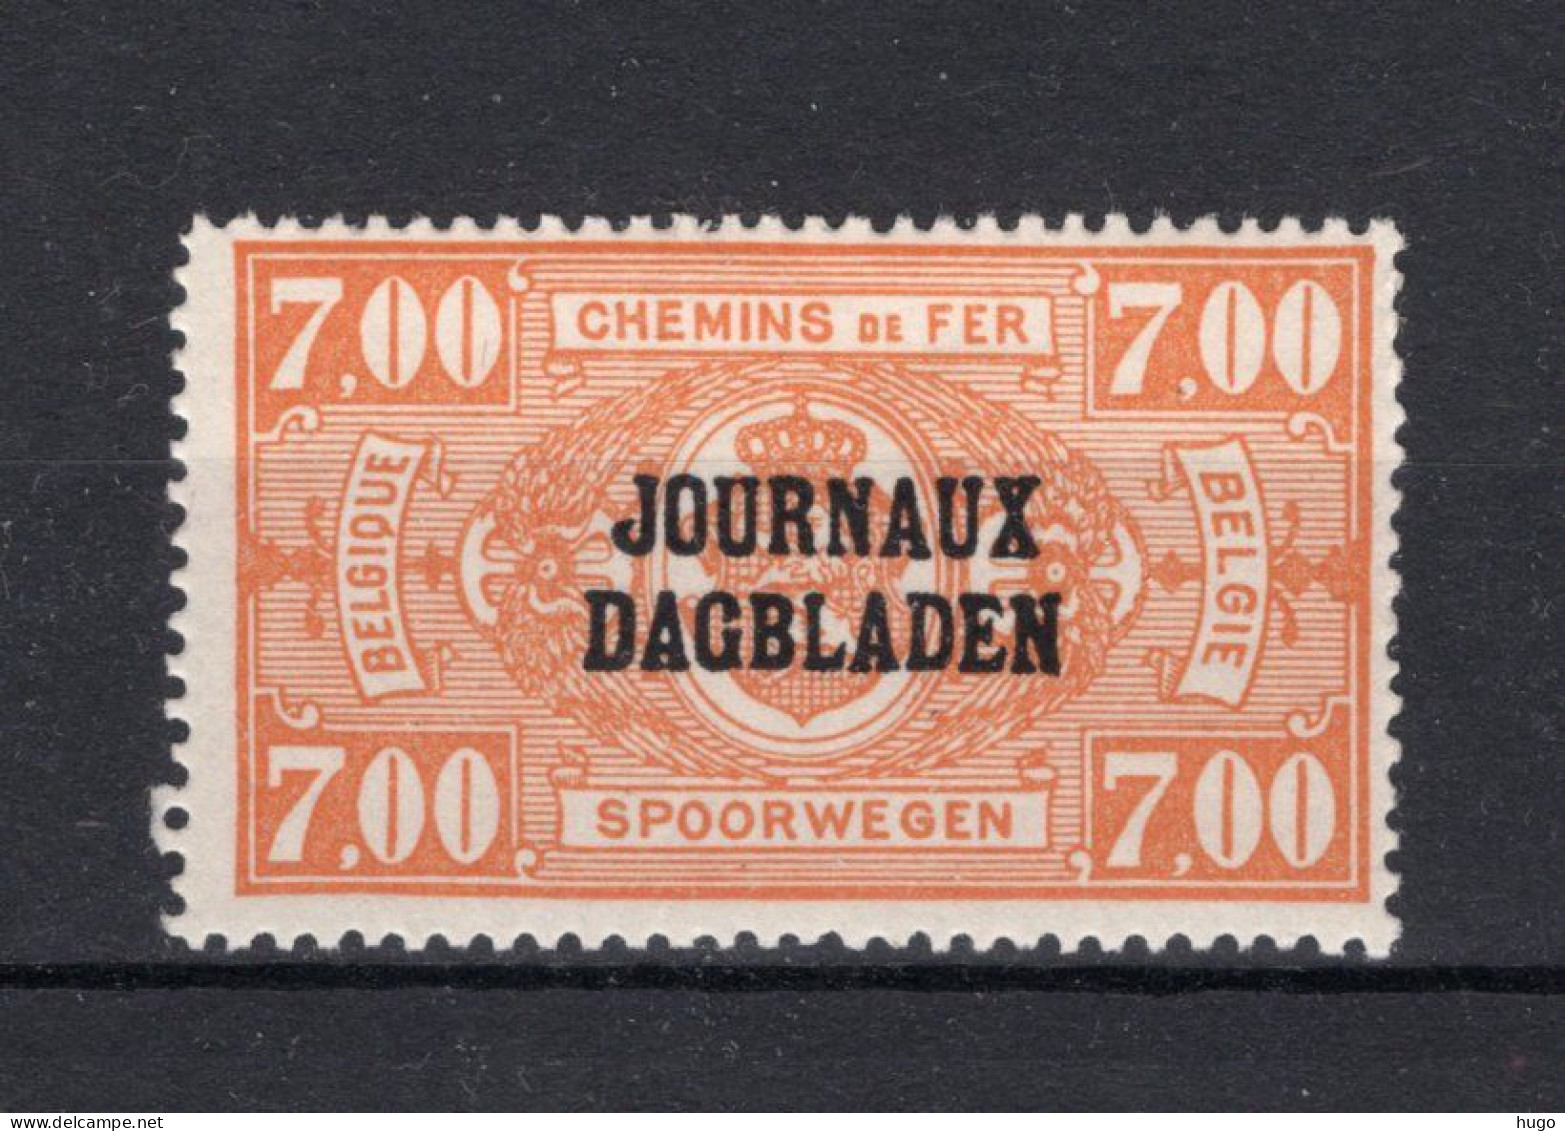 JO32 MNH** 1929 - Type I, R Staat Boven BL - Sot - Dagbladzegels [JO]